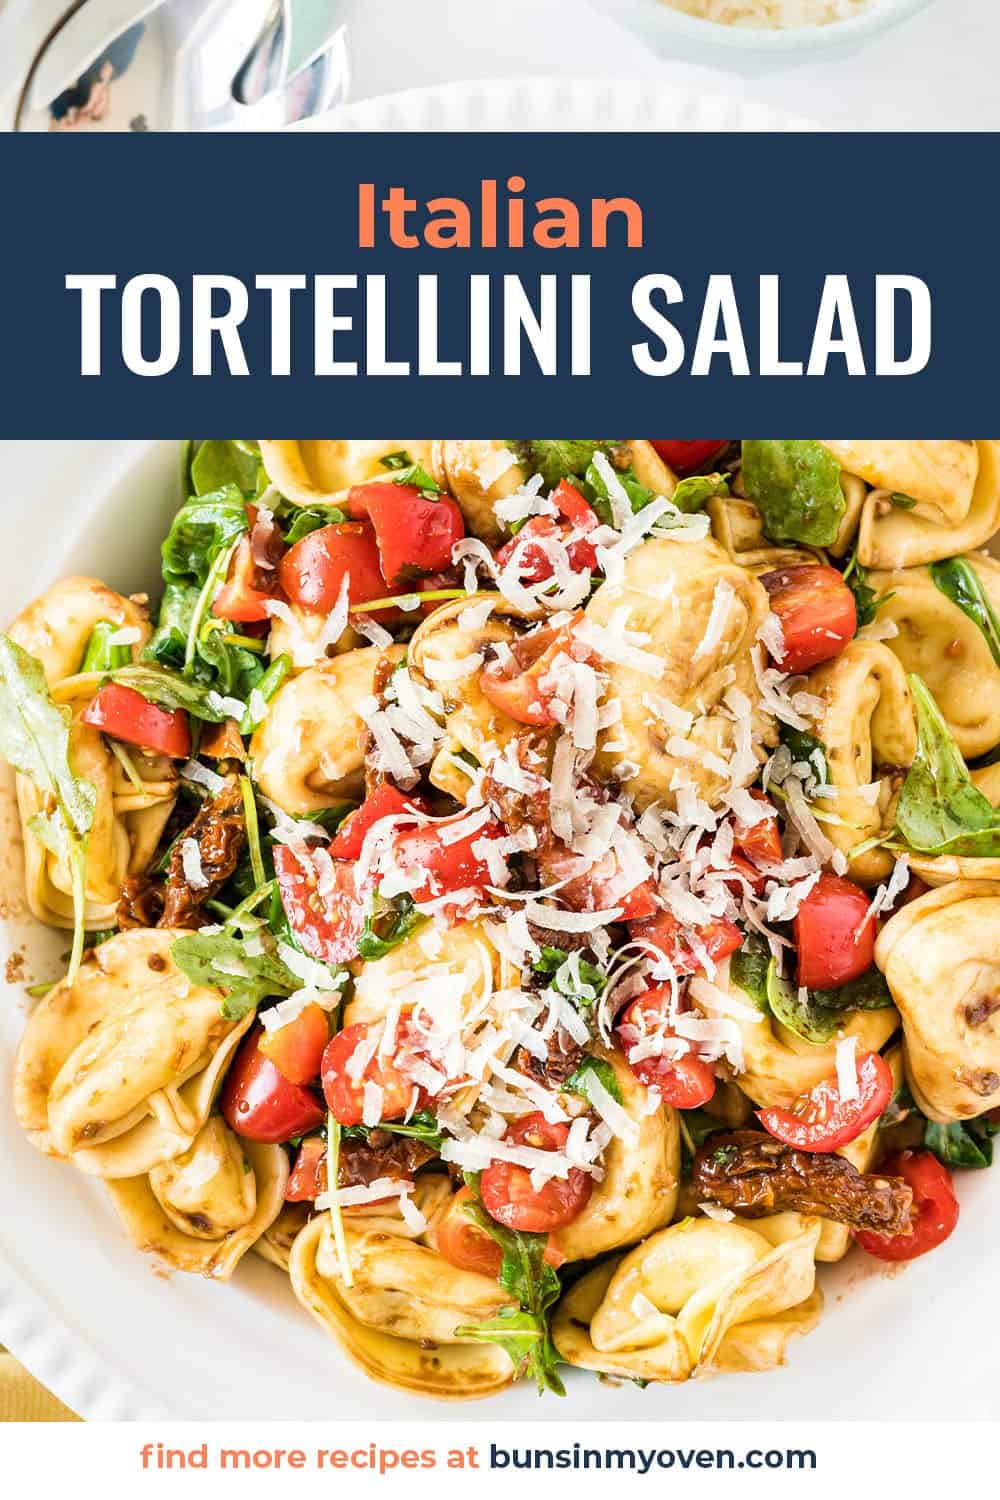 Italian tortellini salad with text for Pinterest.